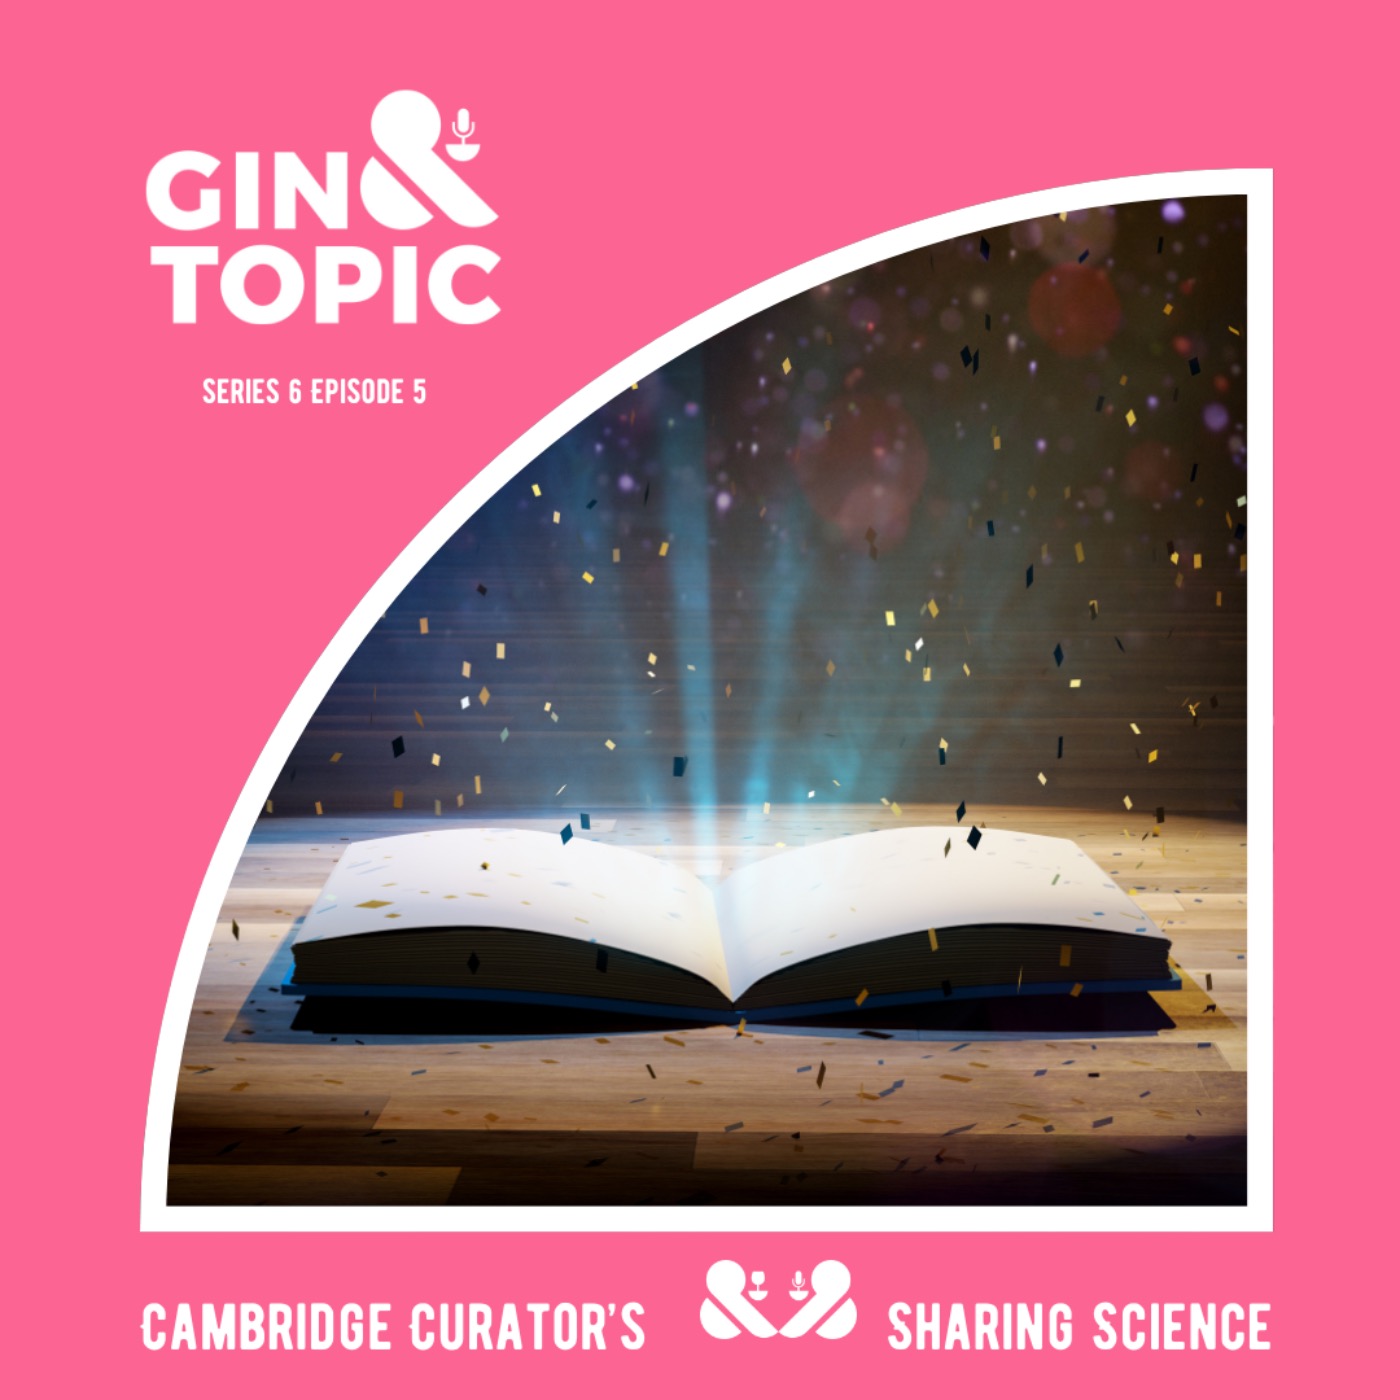 Cambridge Curator's & Sharing Science